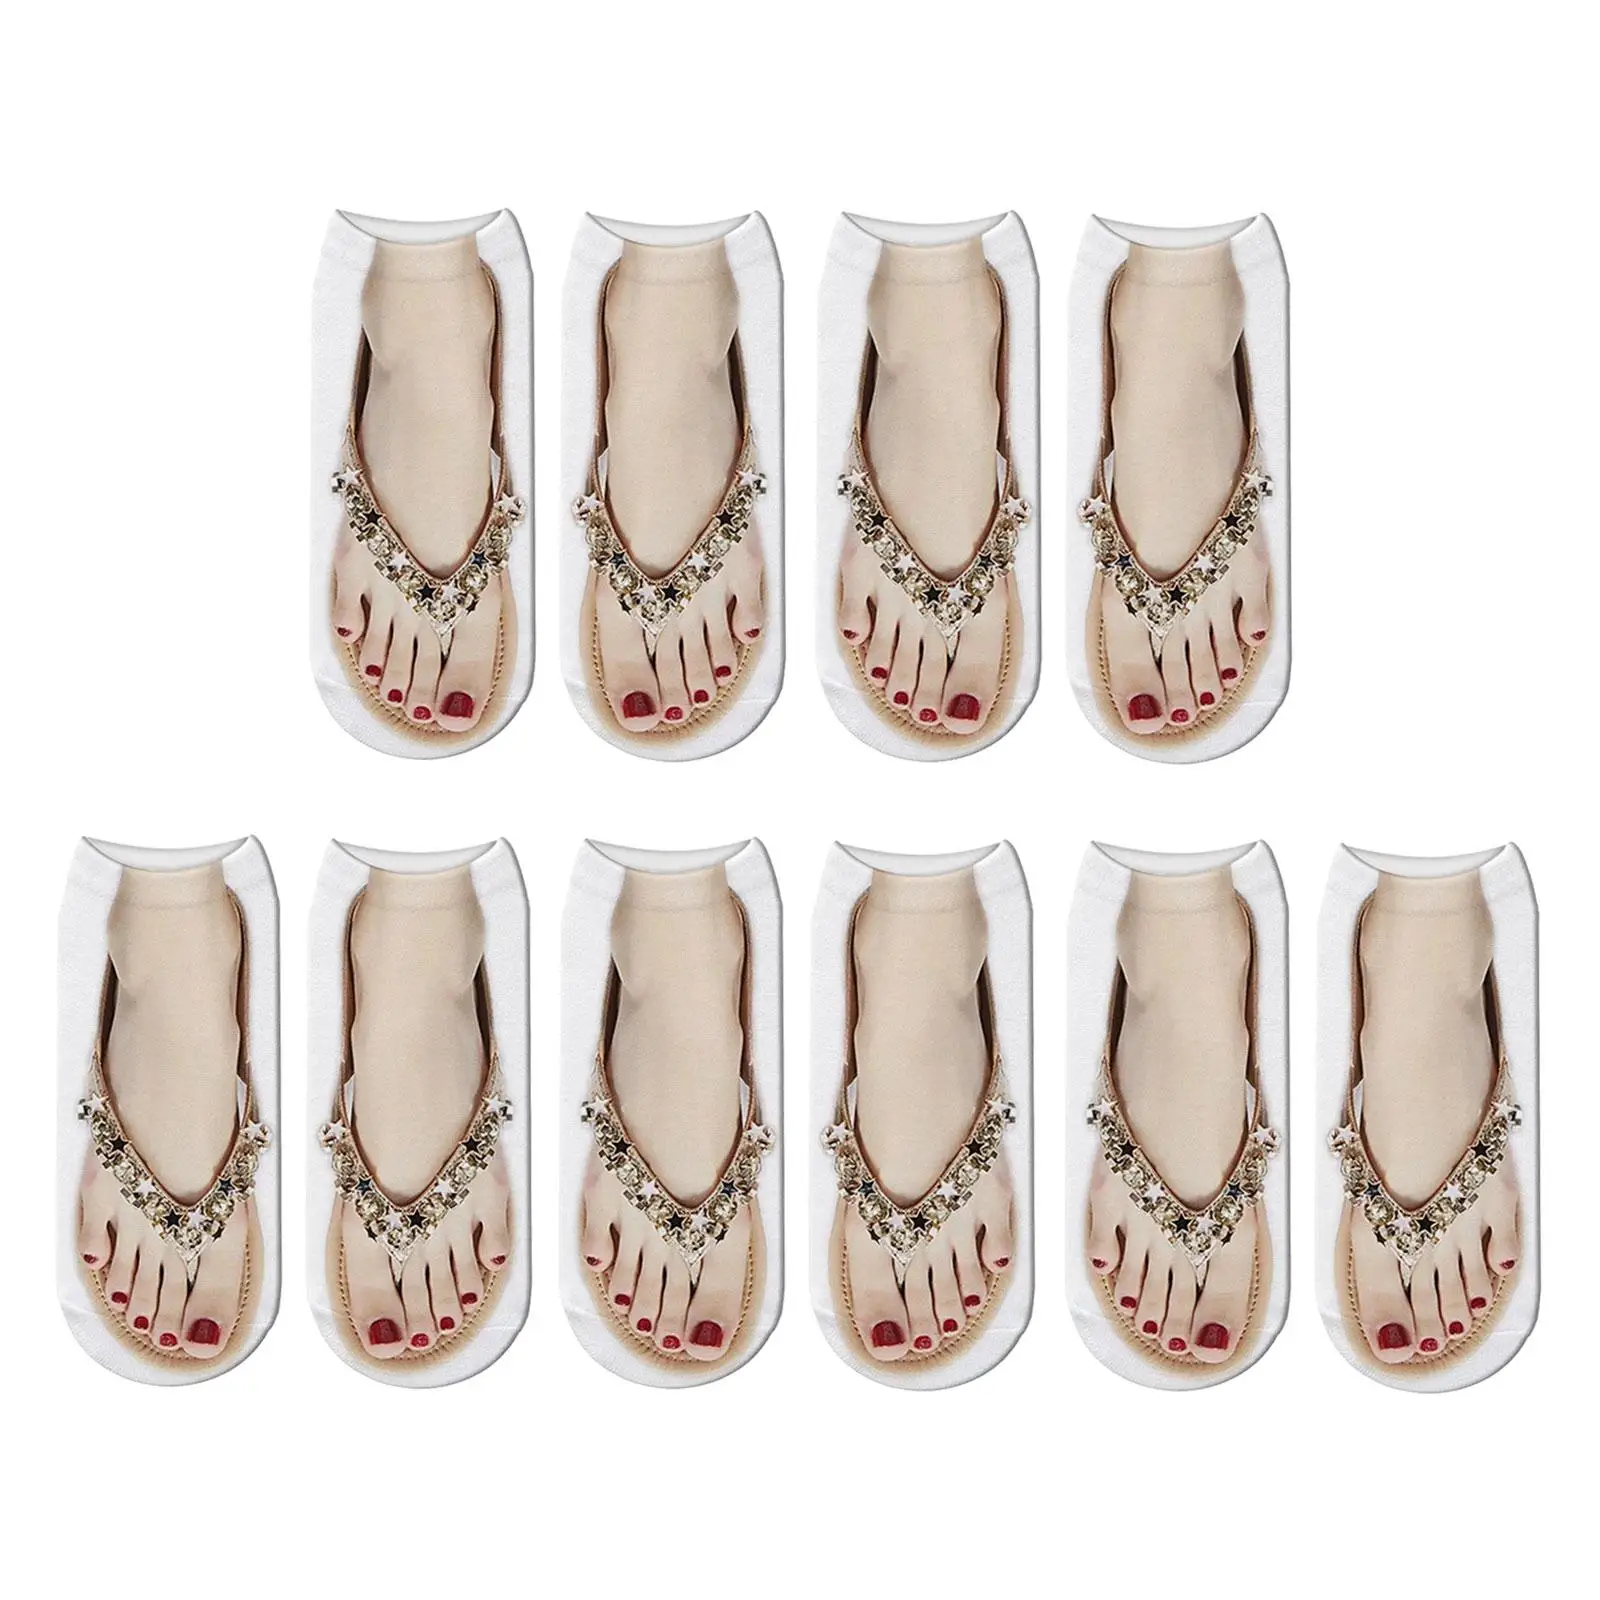 Manicure Print Socks Elastic Fashion Hidden Low Ankle Socks 3D Pattern Socks for Running Women Girls Halloween Yoga Walking